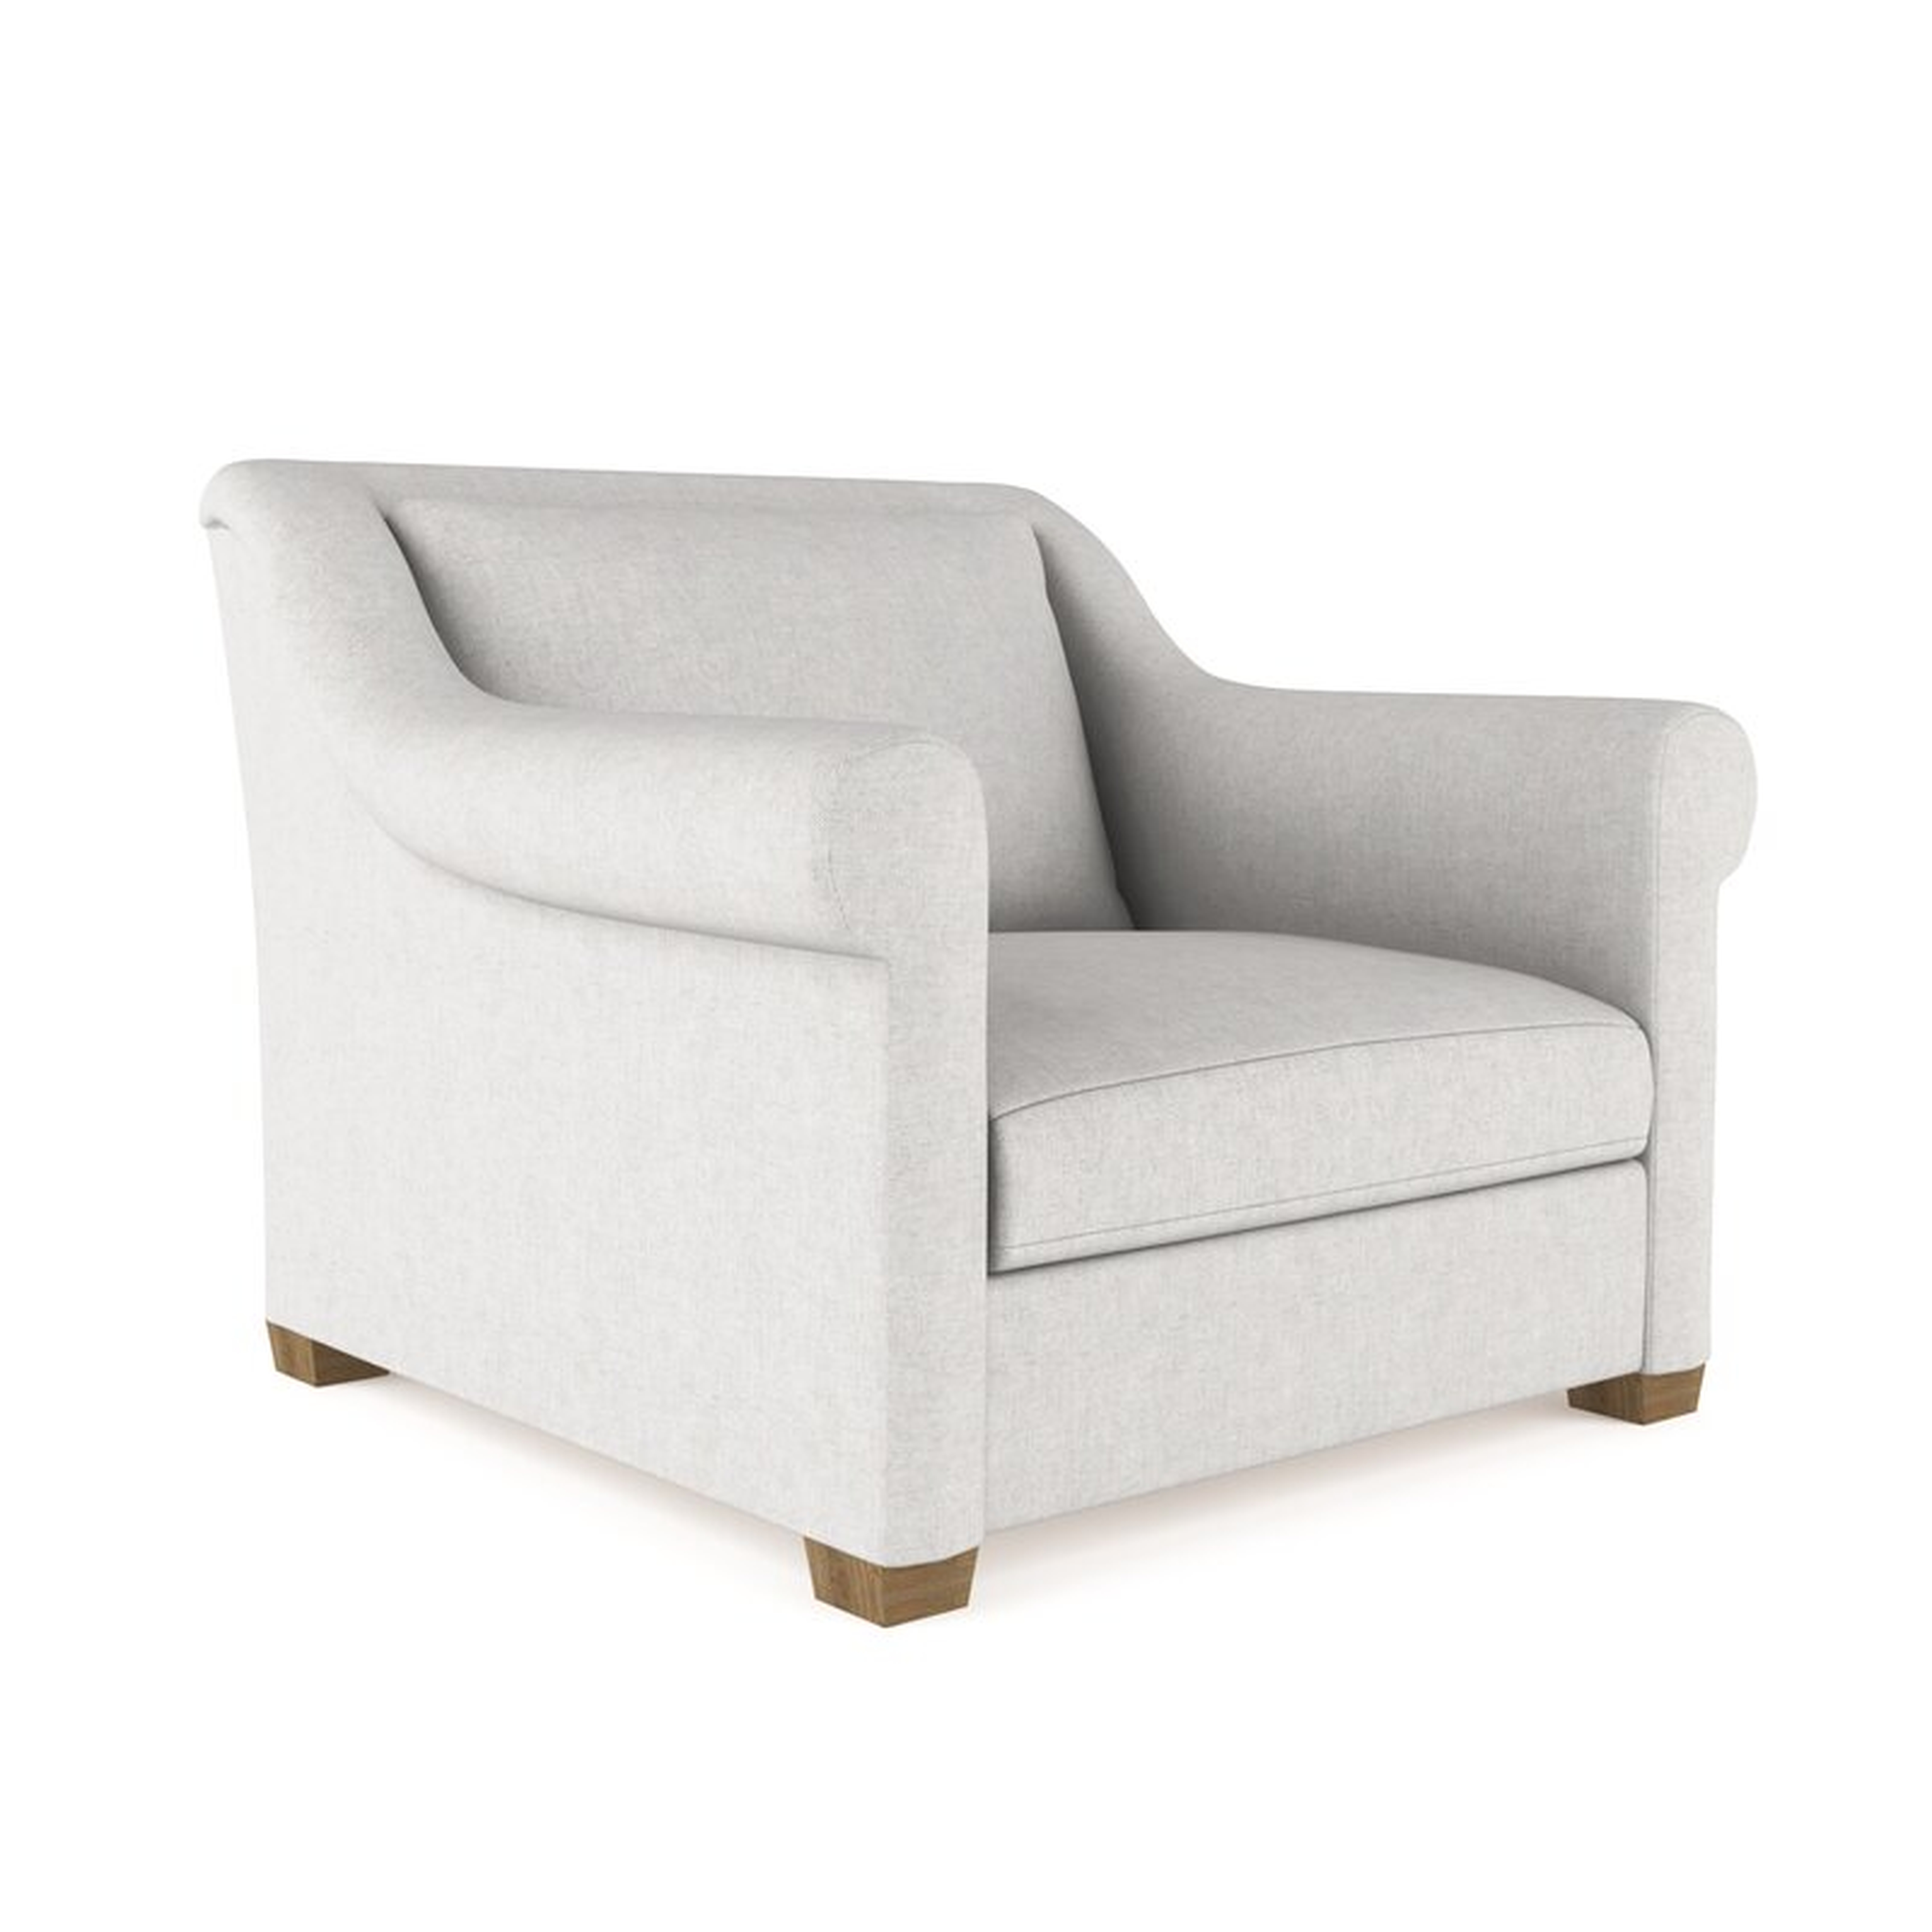 Tandem Arbor Thompson Armchair Upholstery Color: Plush Velvet Silver Streak, Size: 32" H x 43" W x 41" D - Perigold